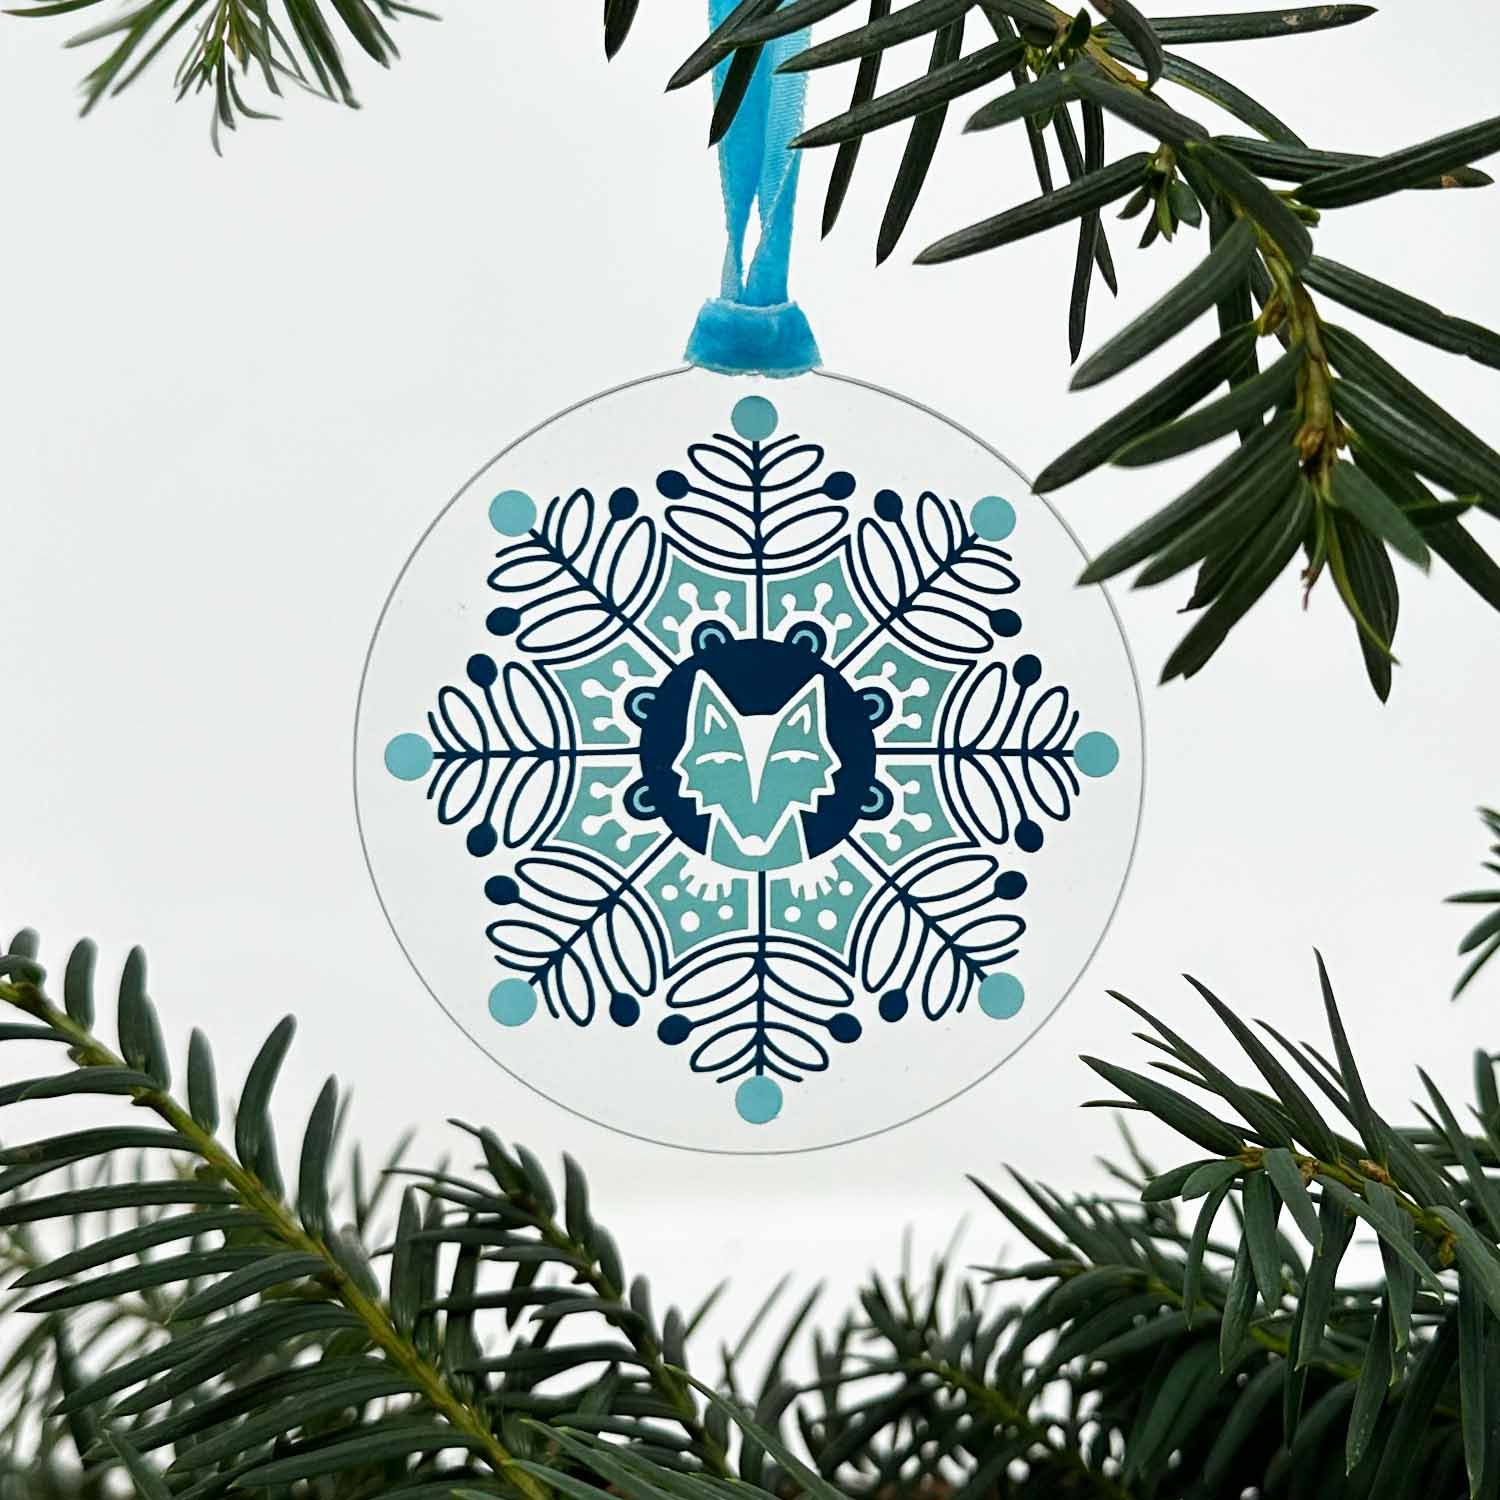 Blue Fox Ornament